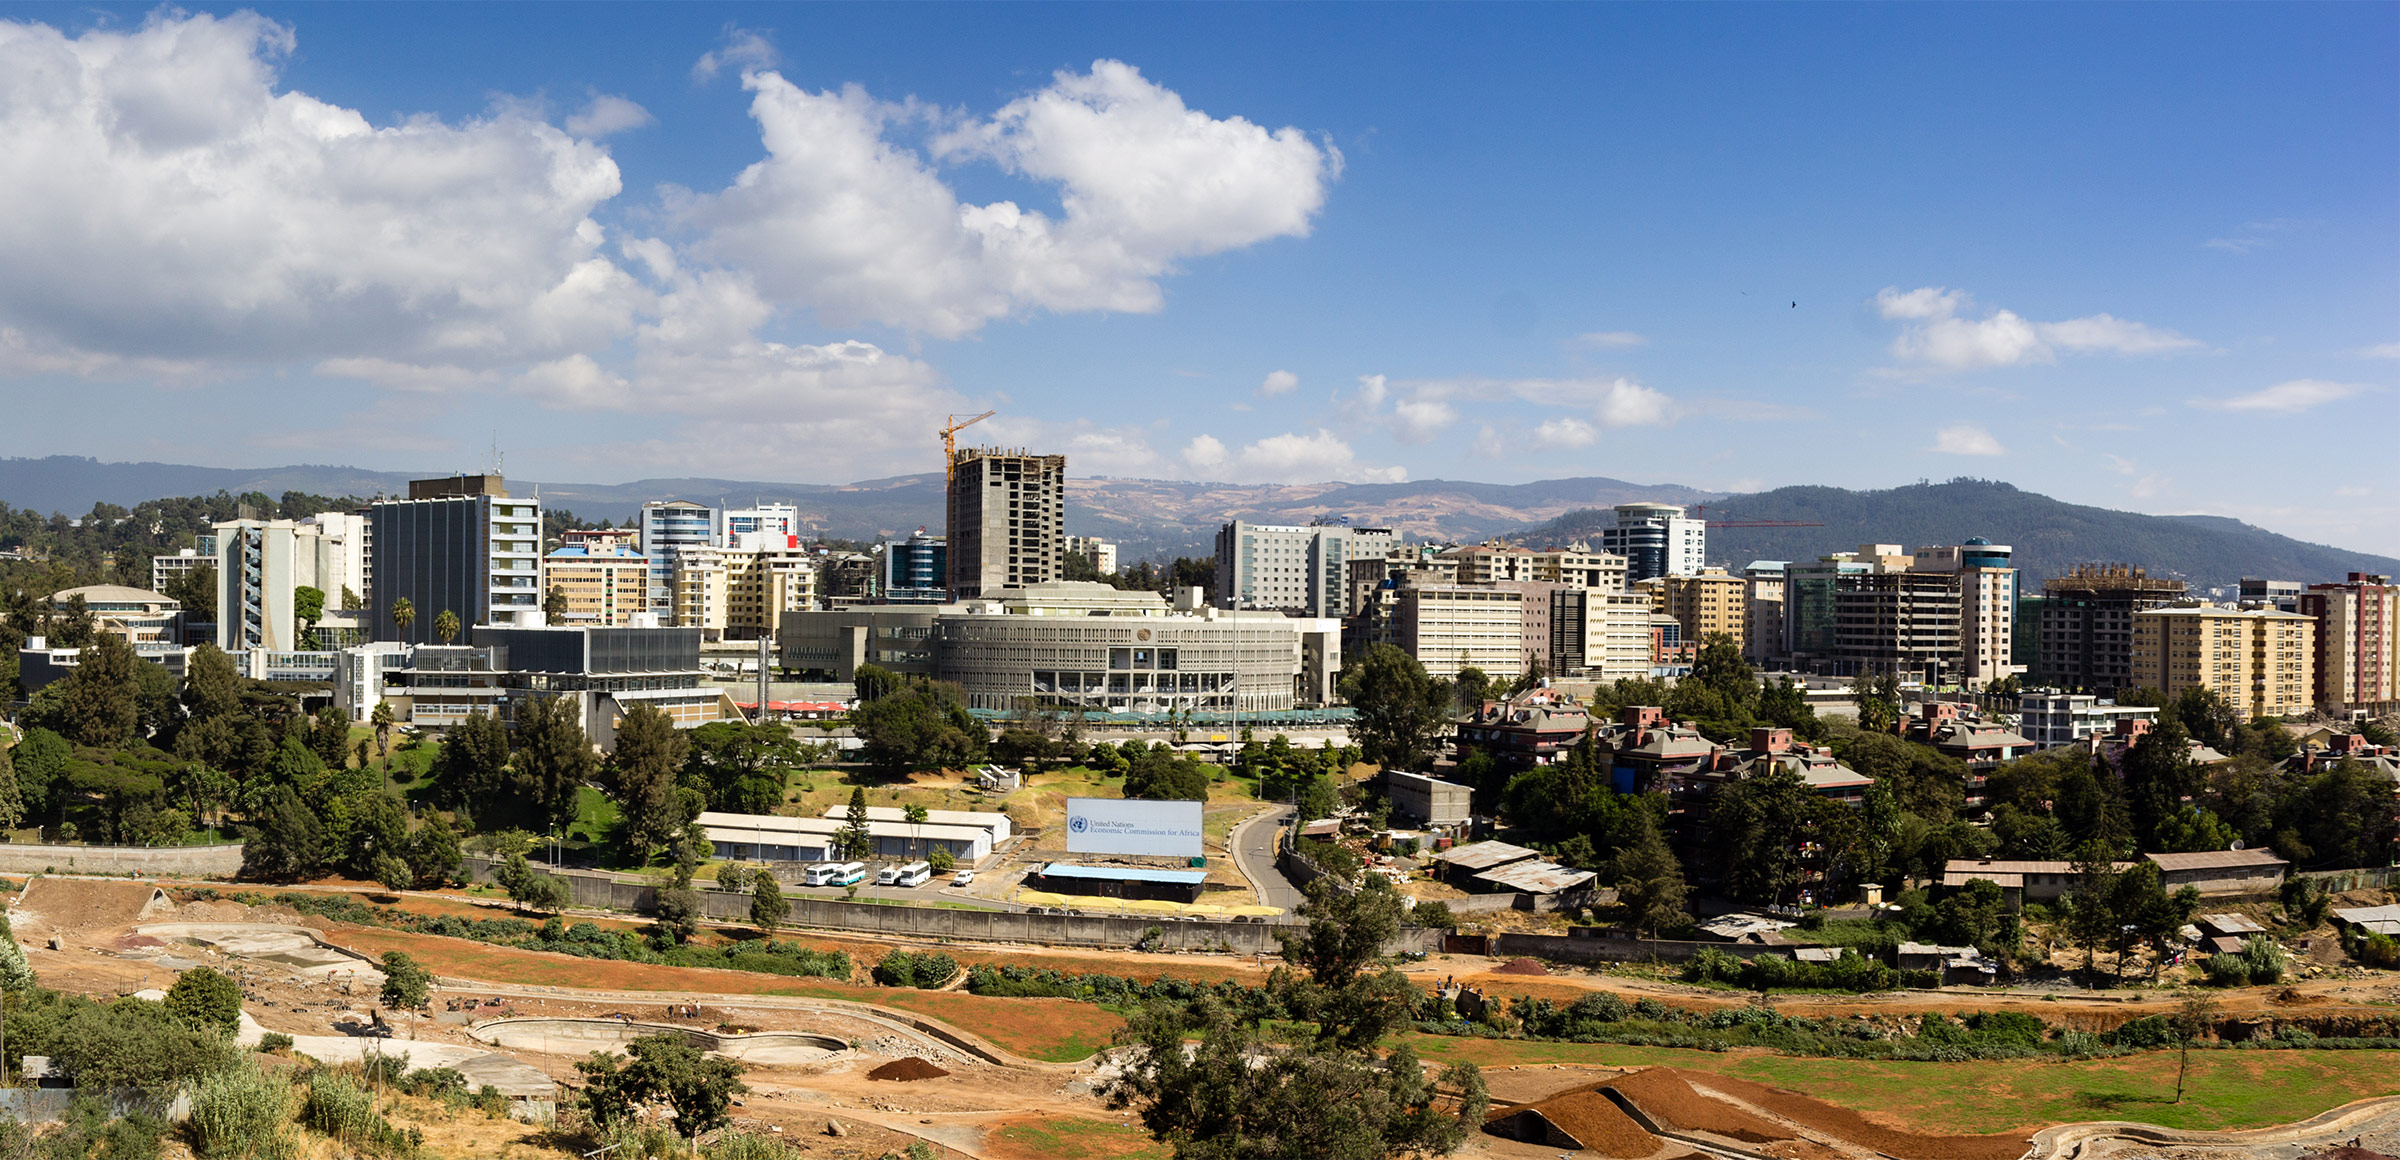 #EnelFocusOn, Addis Ababa - Pilling on renewables for Africa - Enel.com